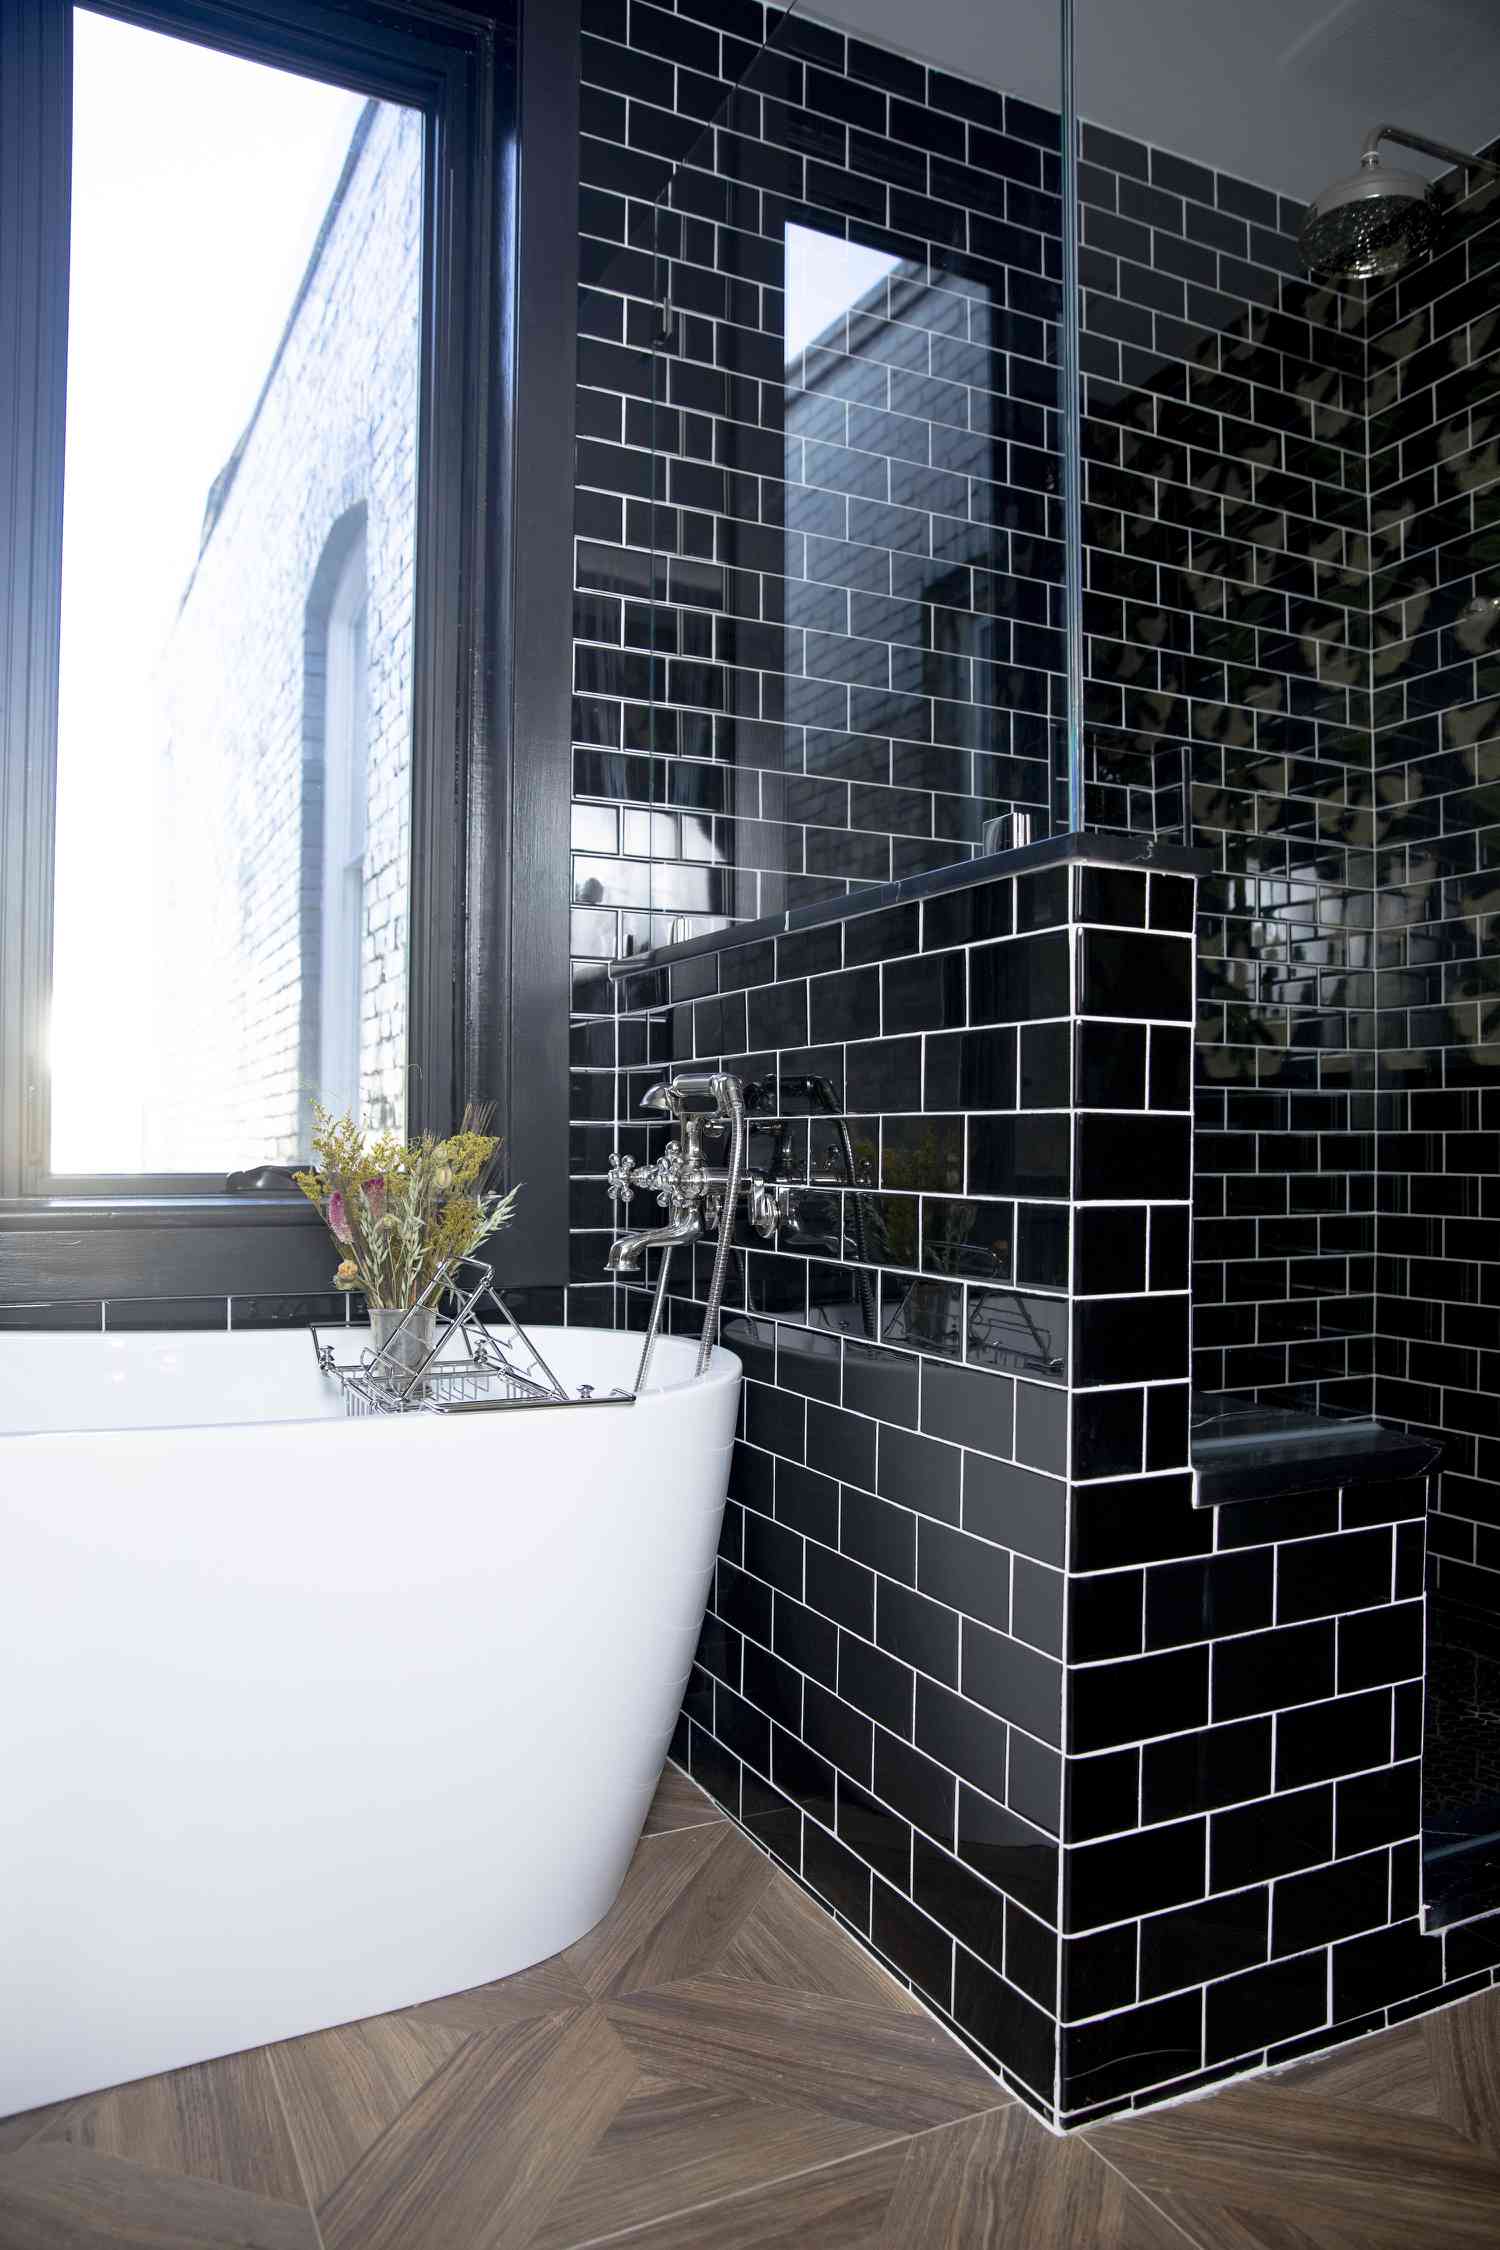 Black tiled bathroom with white freestanding tub.